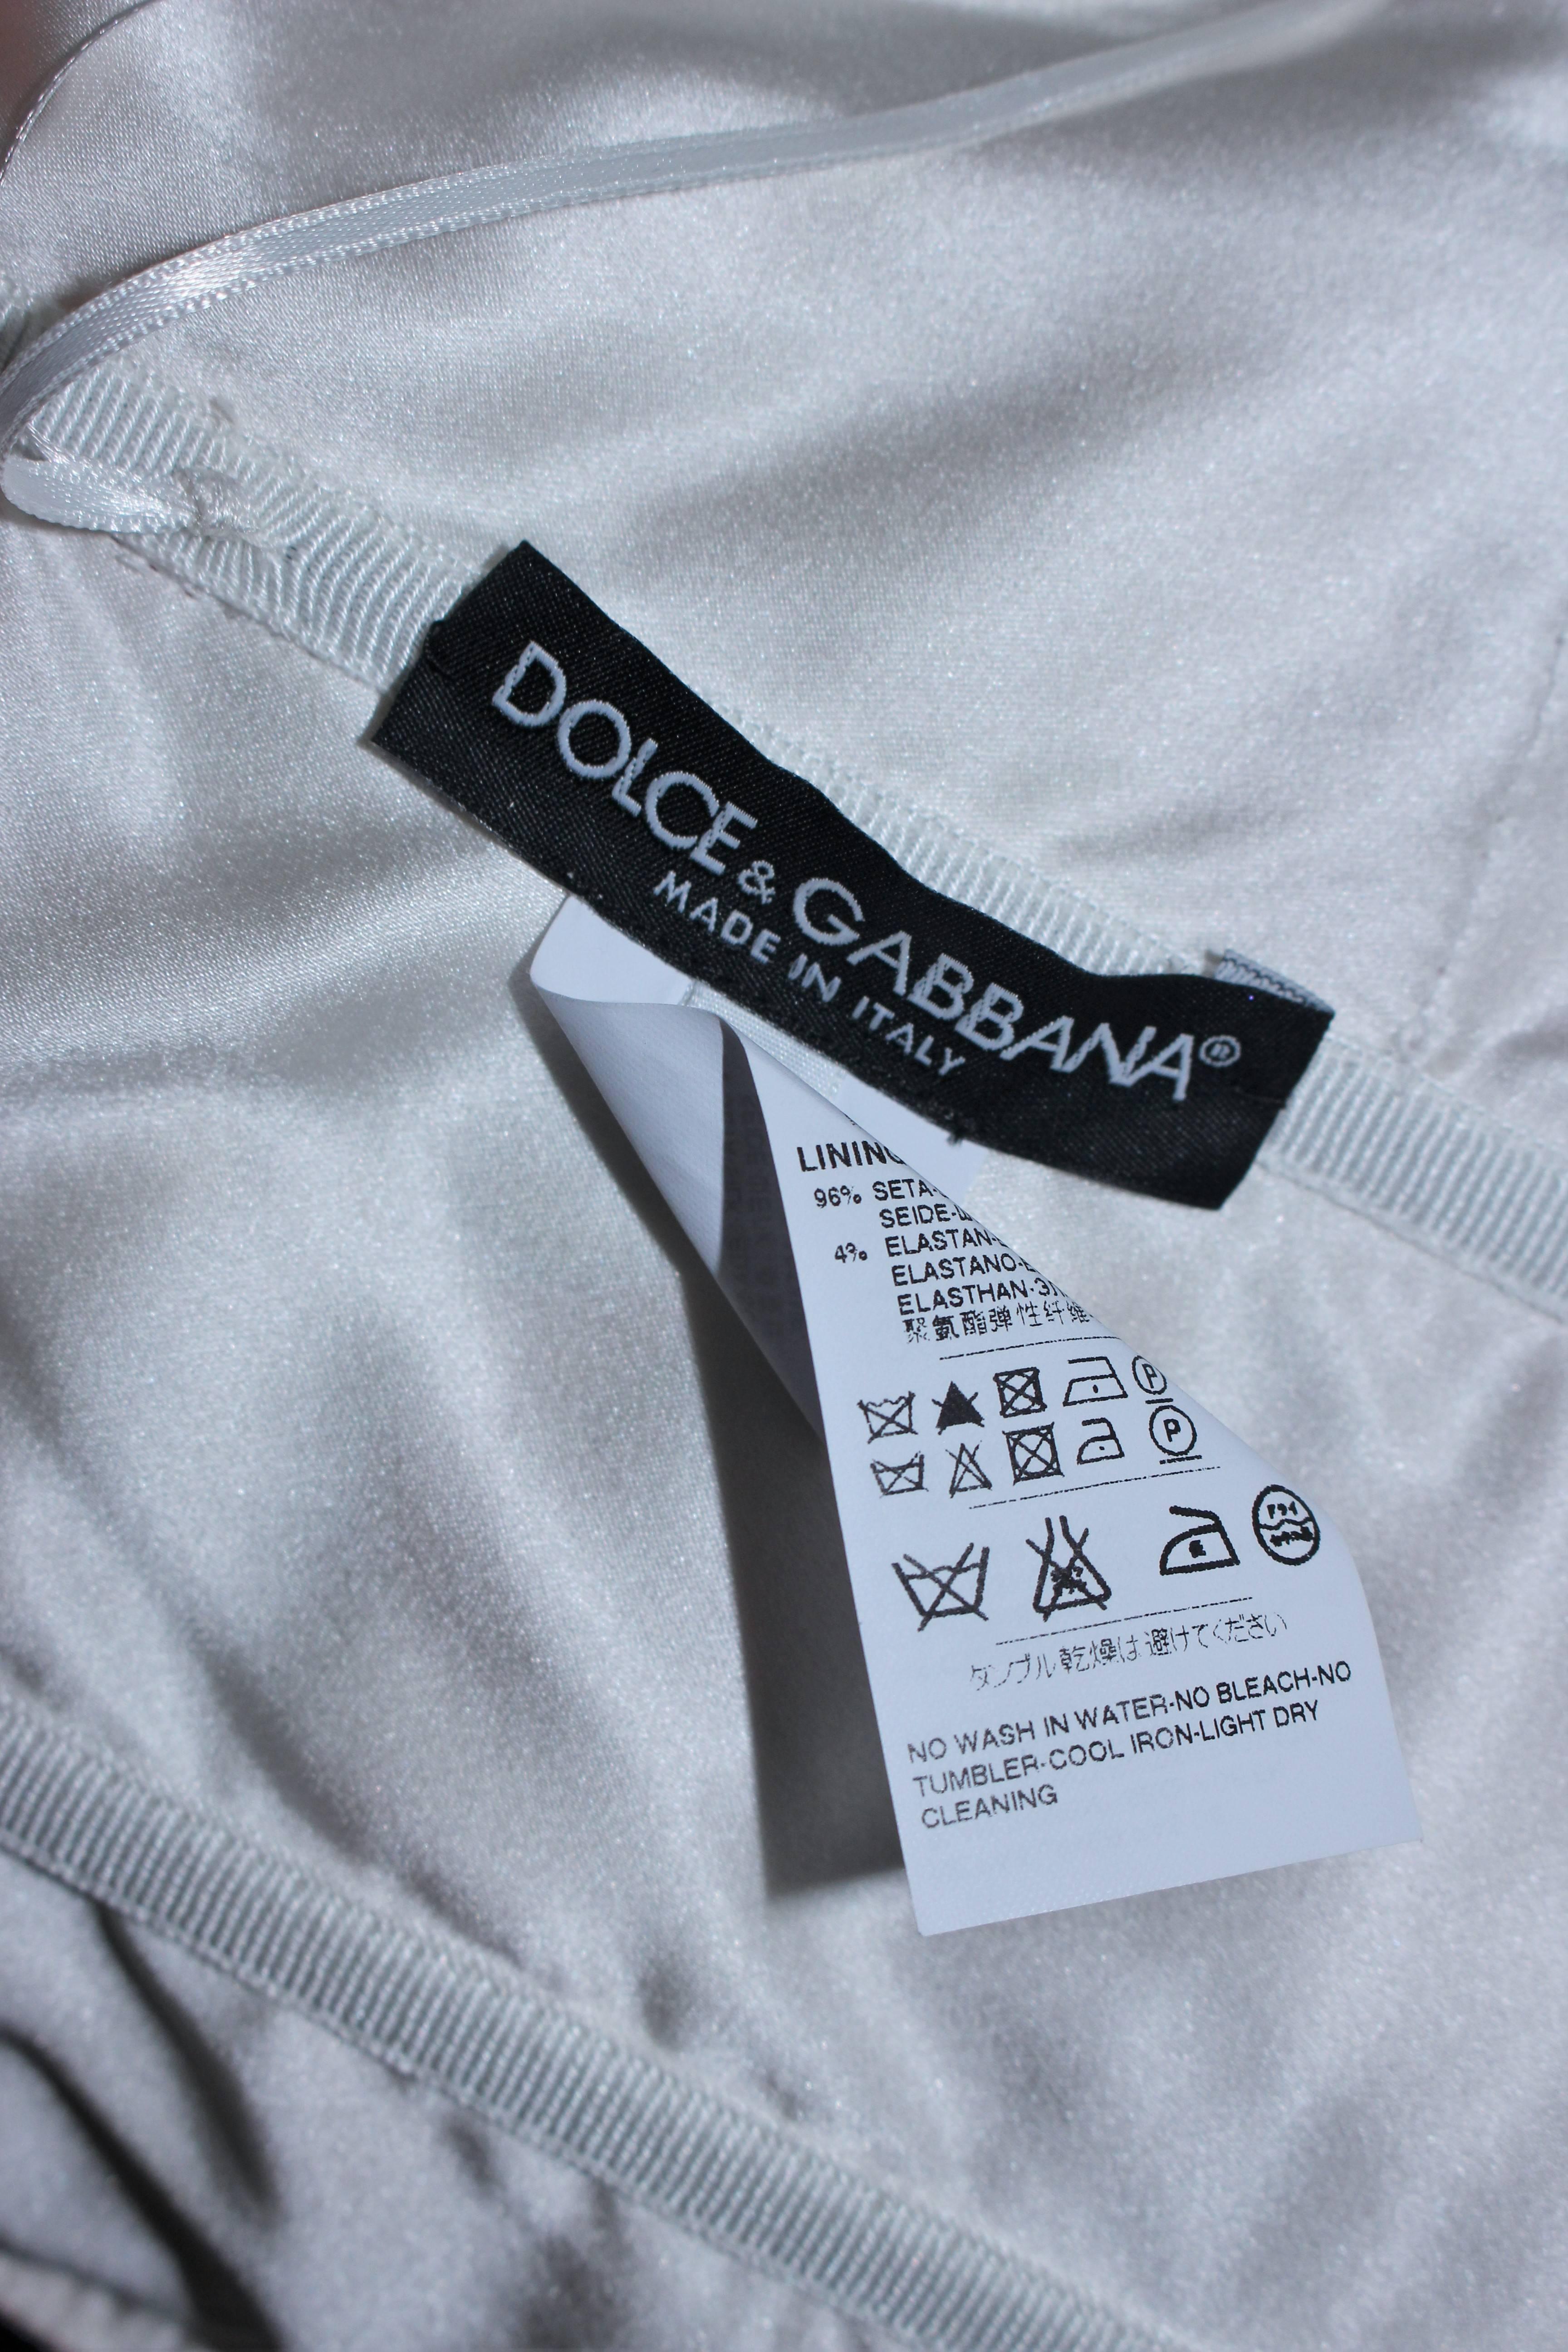 DOLCE AND GABBANA Ruched Stretch Silk TOMATO Print Dress Size 38 3